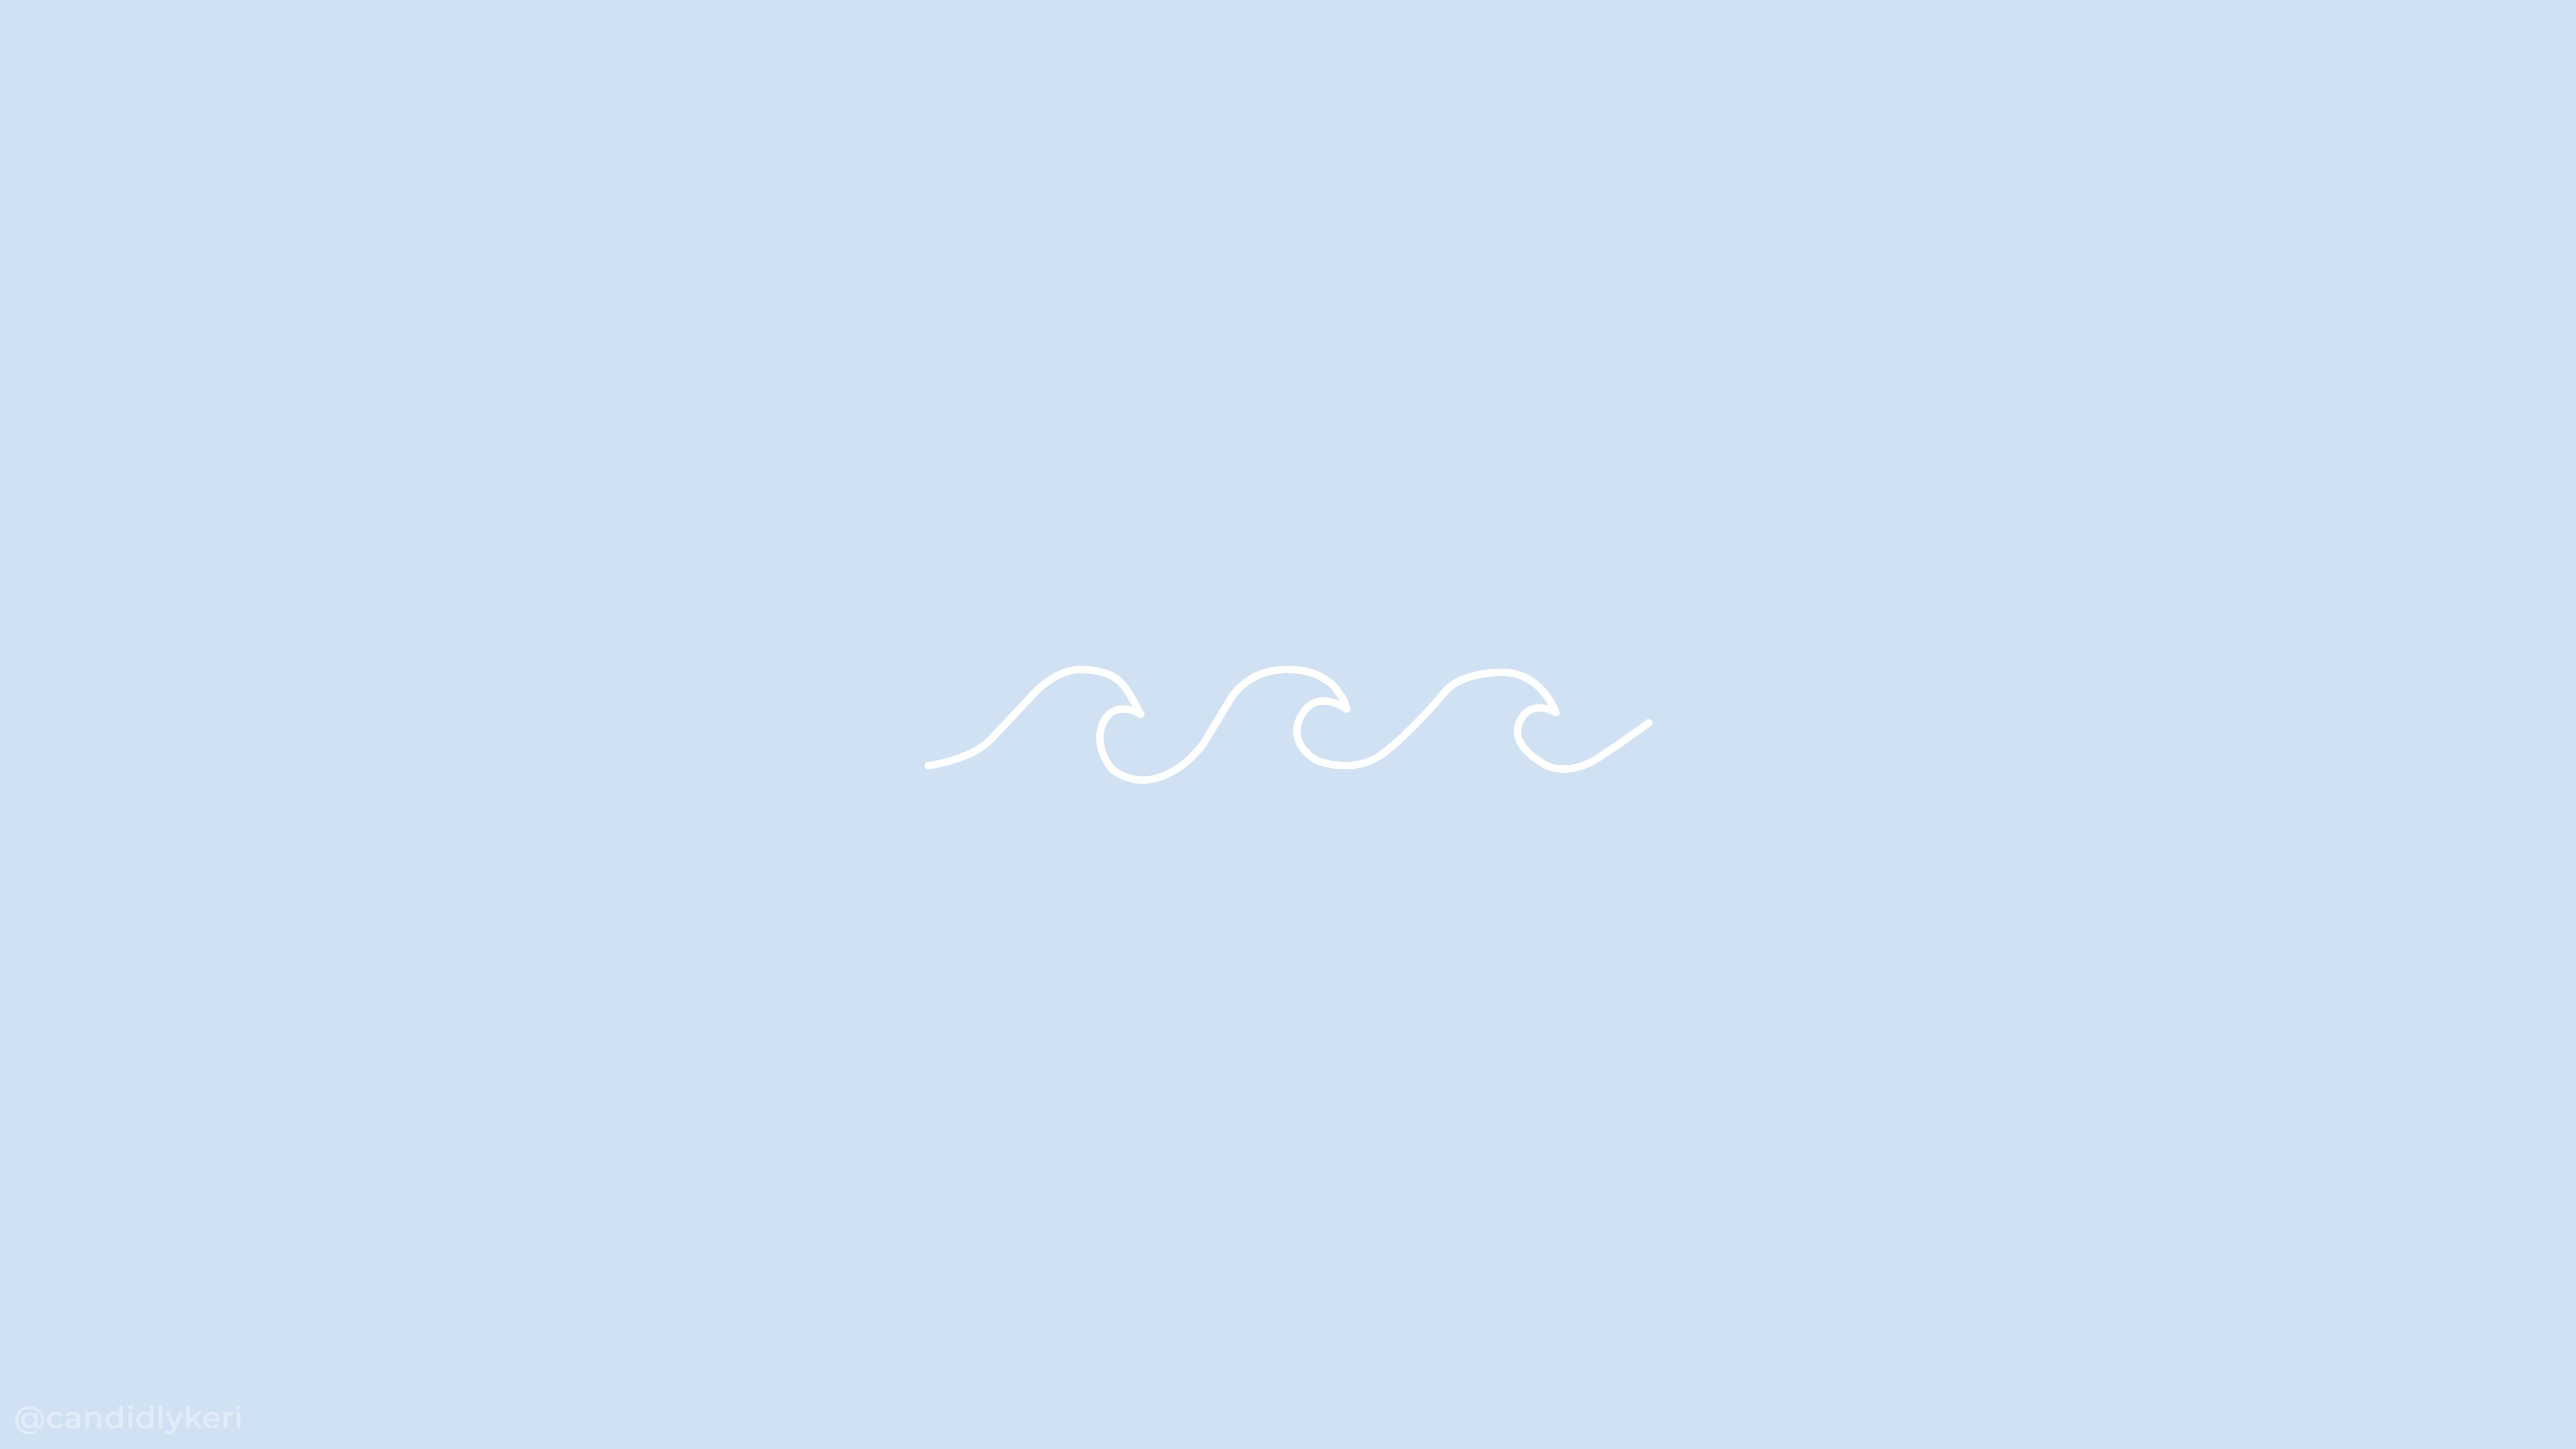 Minimalist white wave icon on a blue background - Desktop, laptop, minimalist, pretty, cute, computer, simple, clean